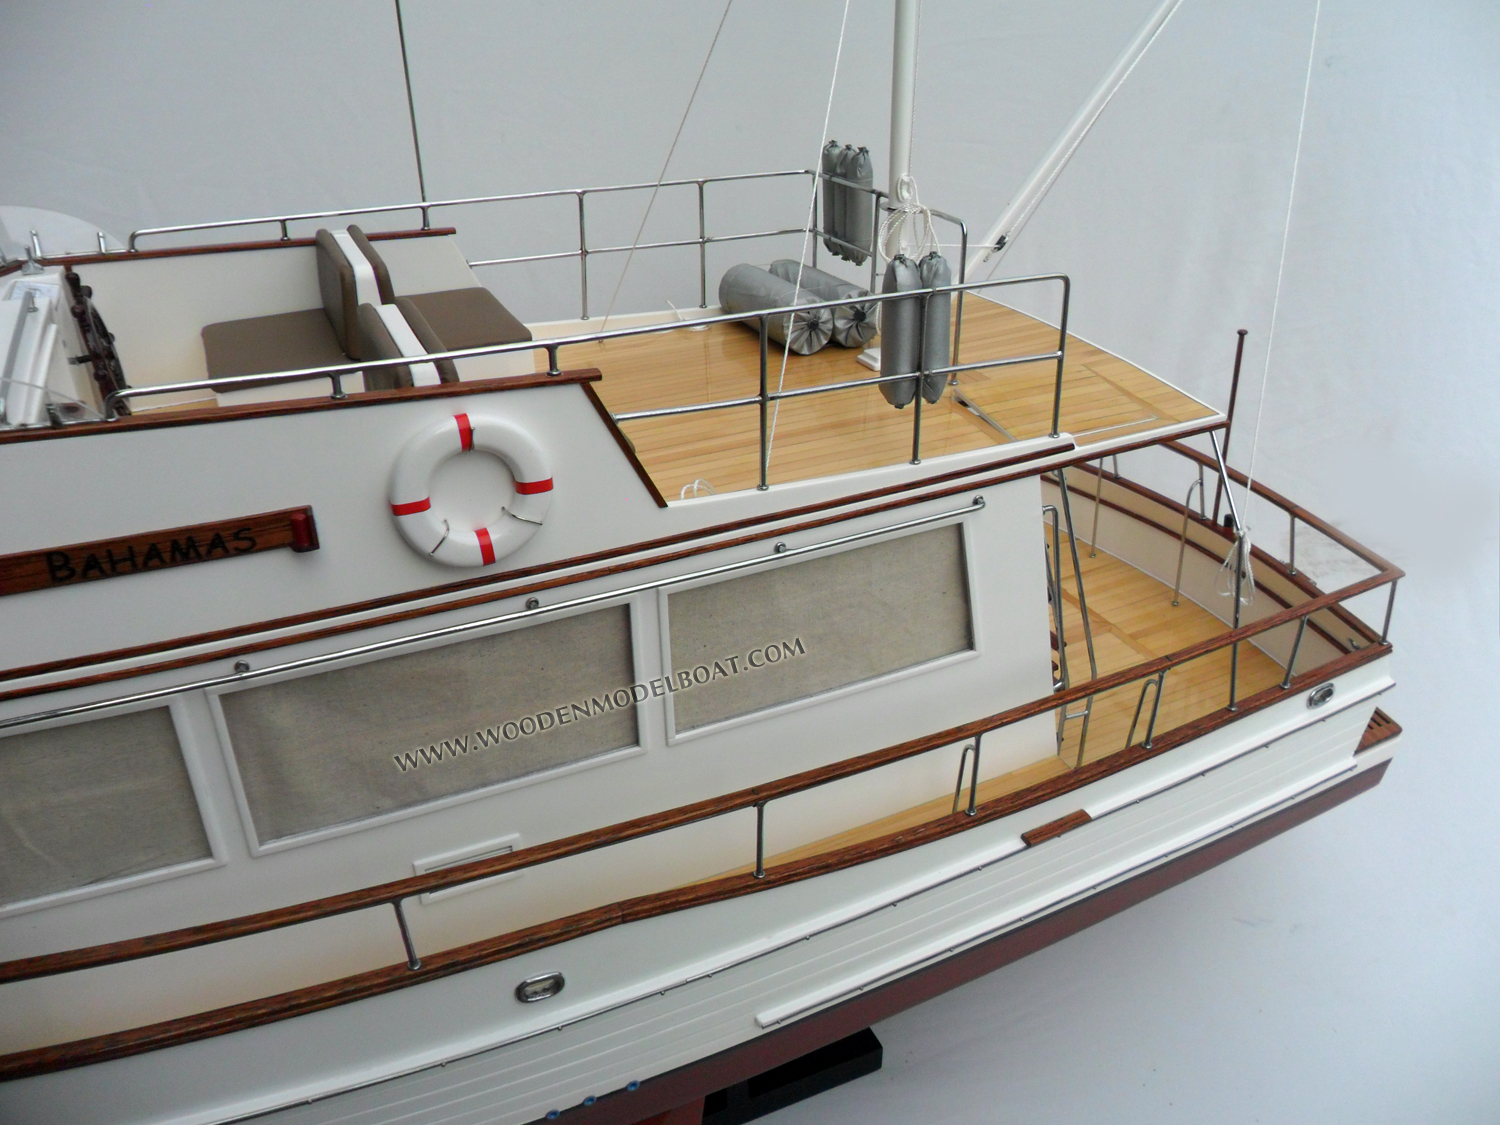 Wooden Model Boat Grand Bank 32 model